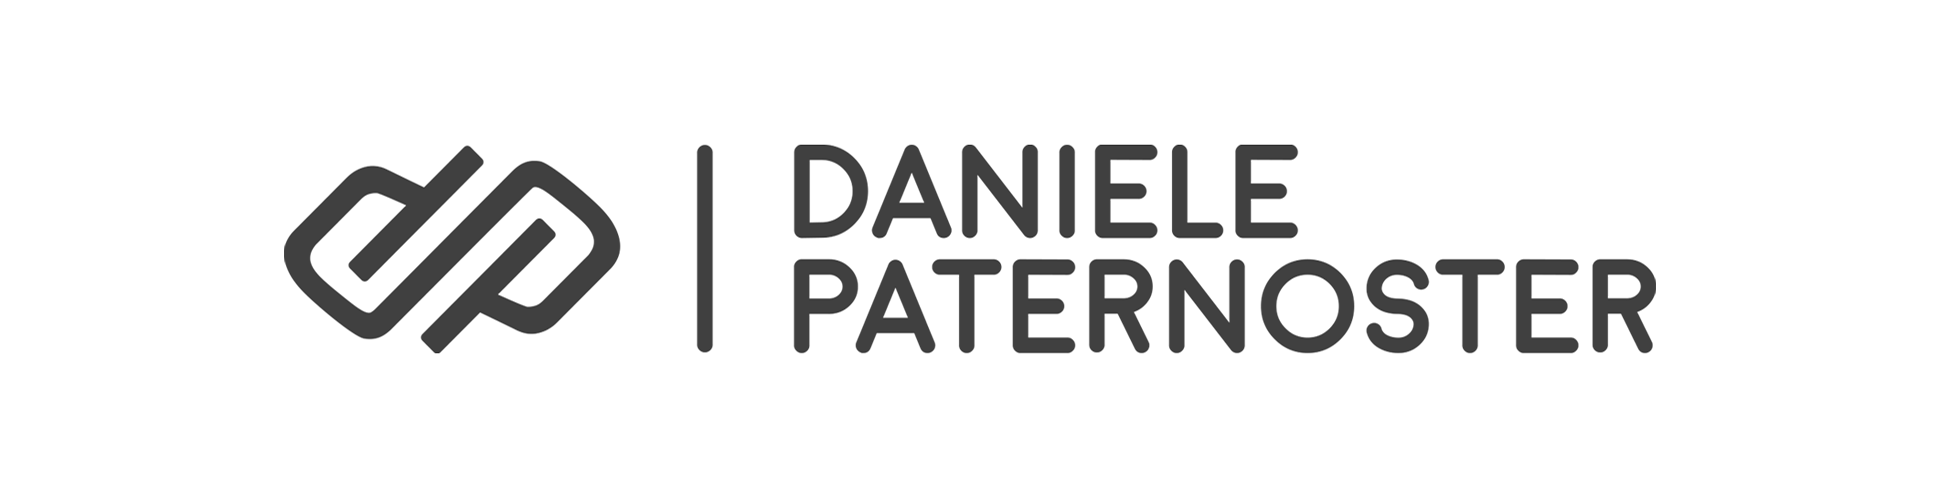 Daniele Paternoster